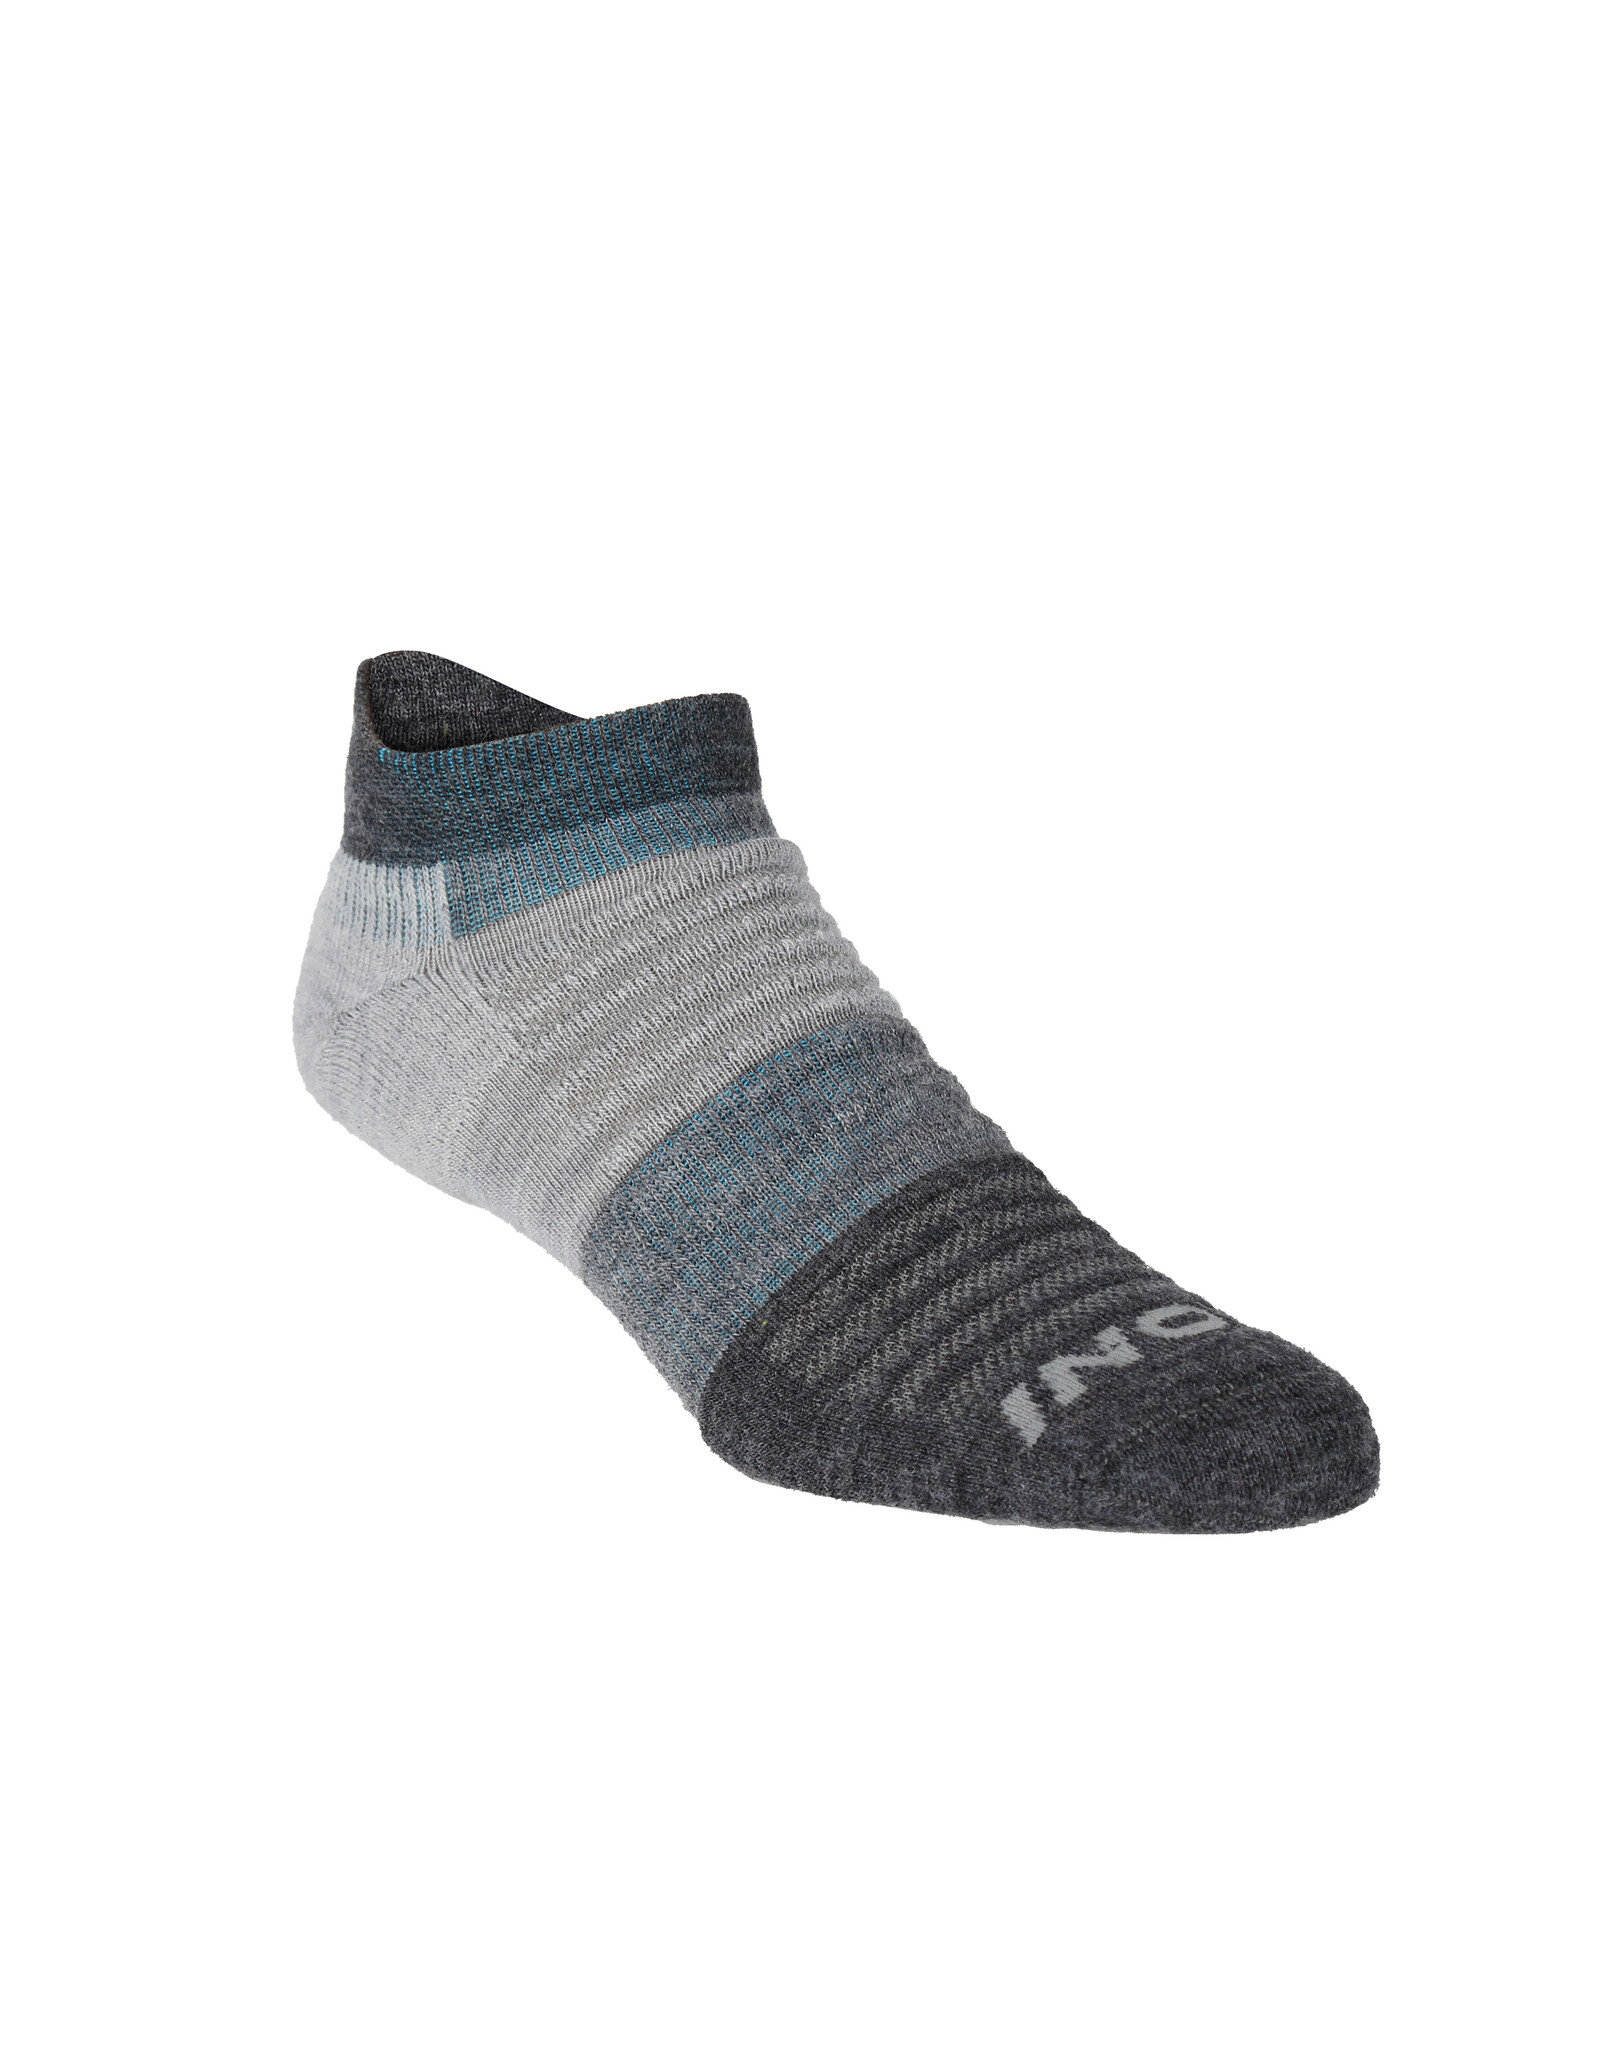 Inov-8 Merino Low Sock - Grey/Melange